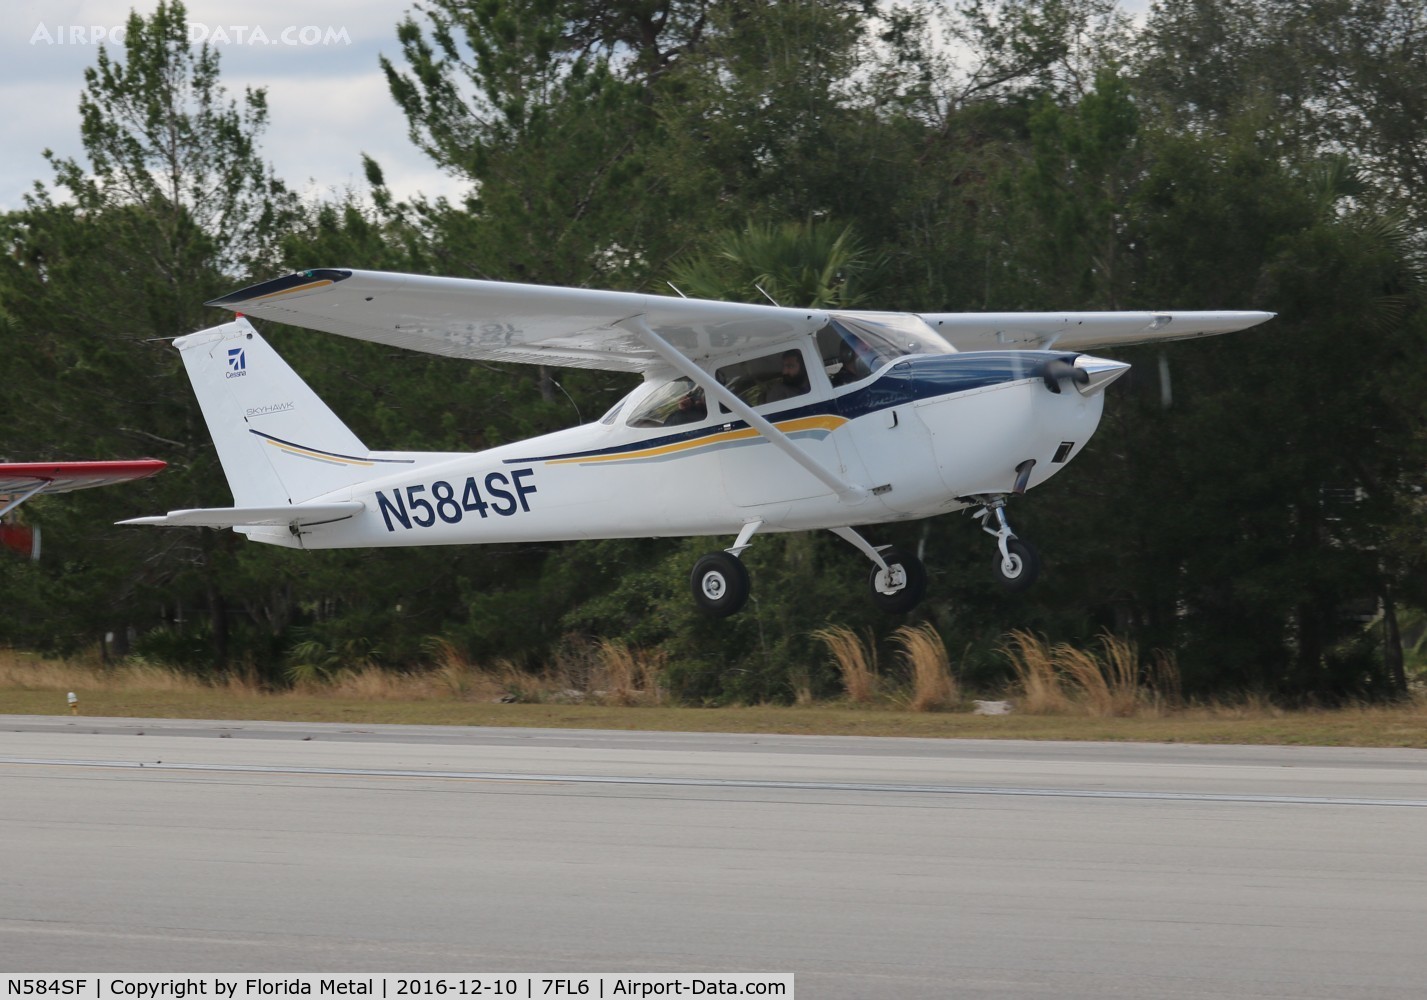 N584SF, 1968 Cessna 172I C/N 17256834, Cessna 172I